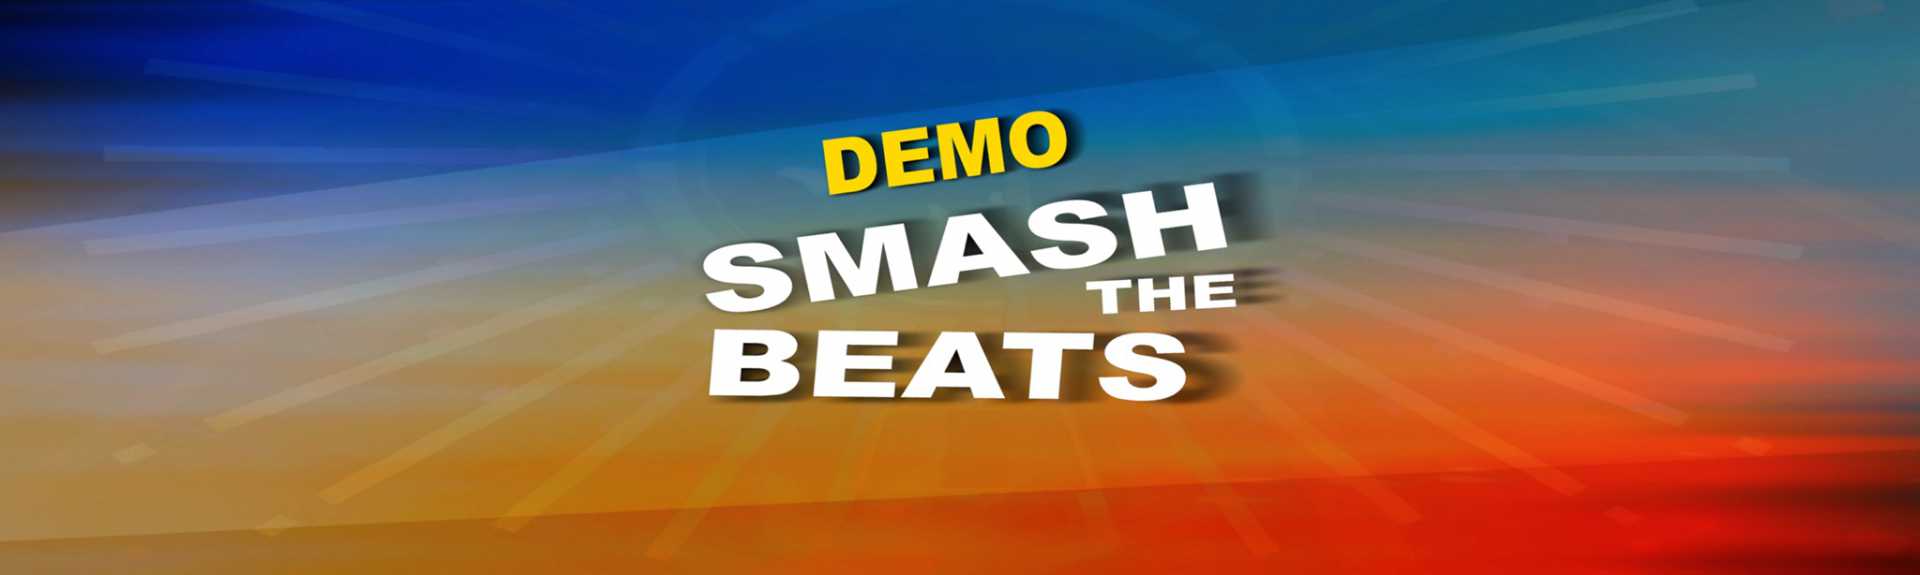 Smash The Beats Demo